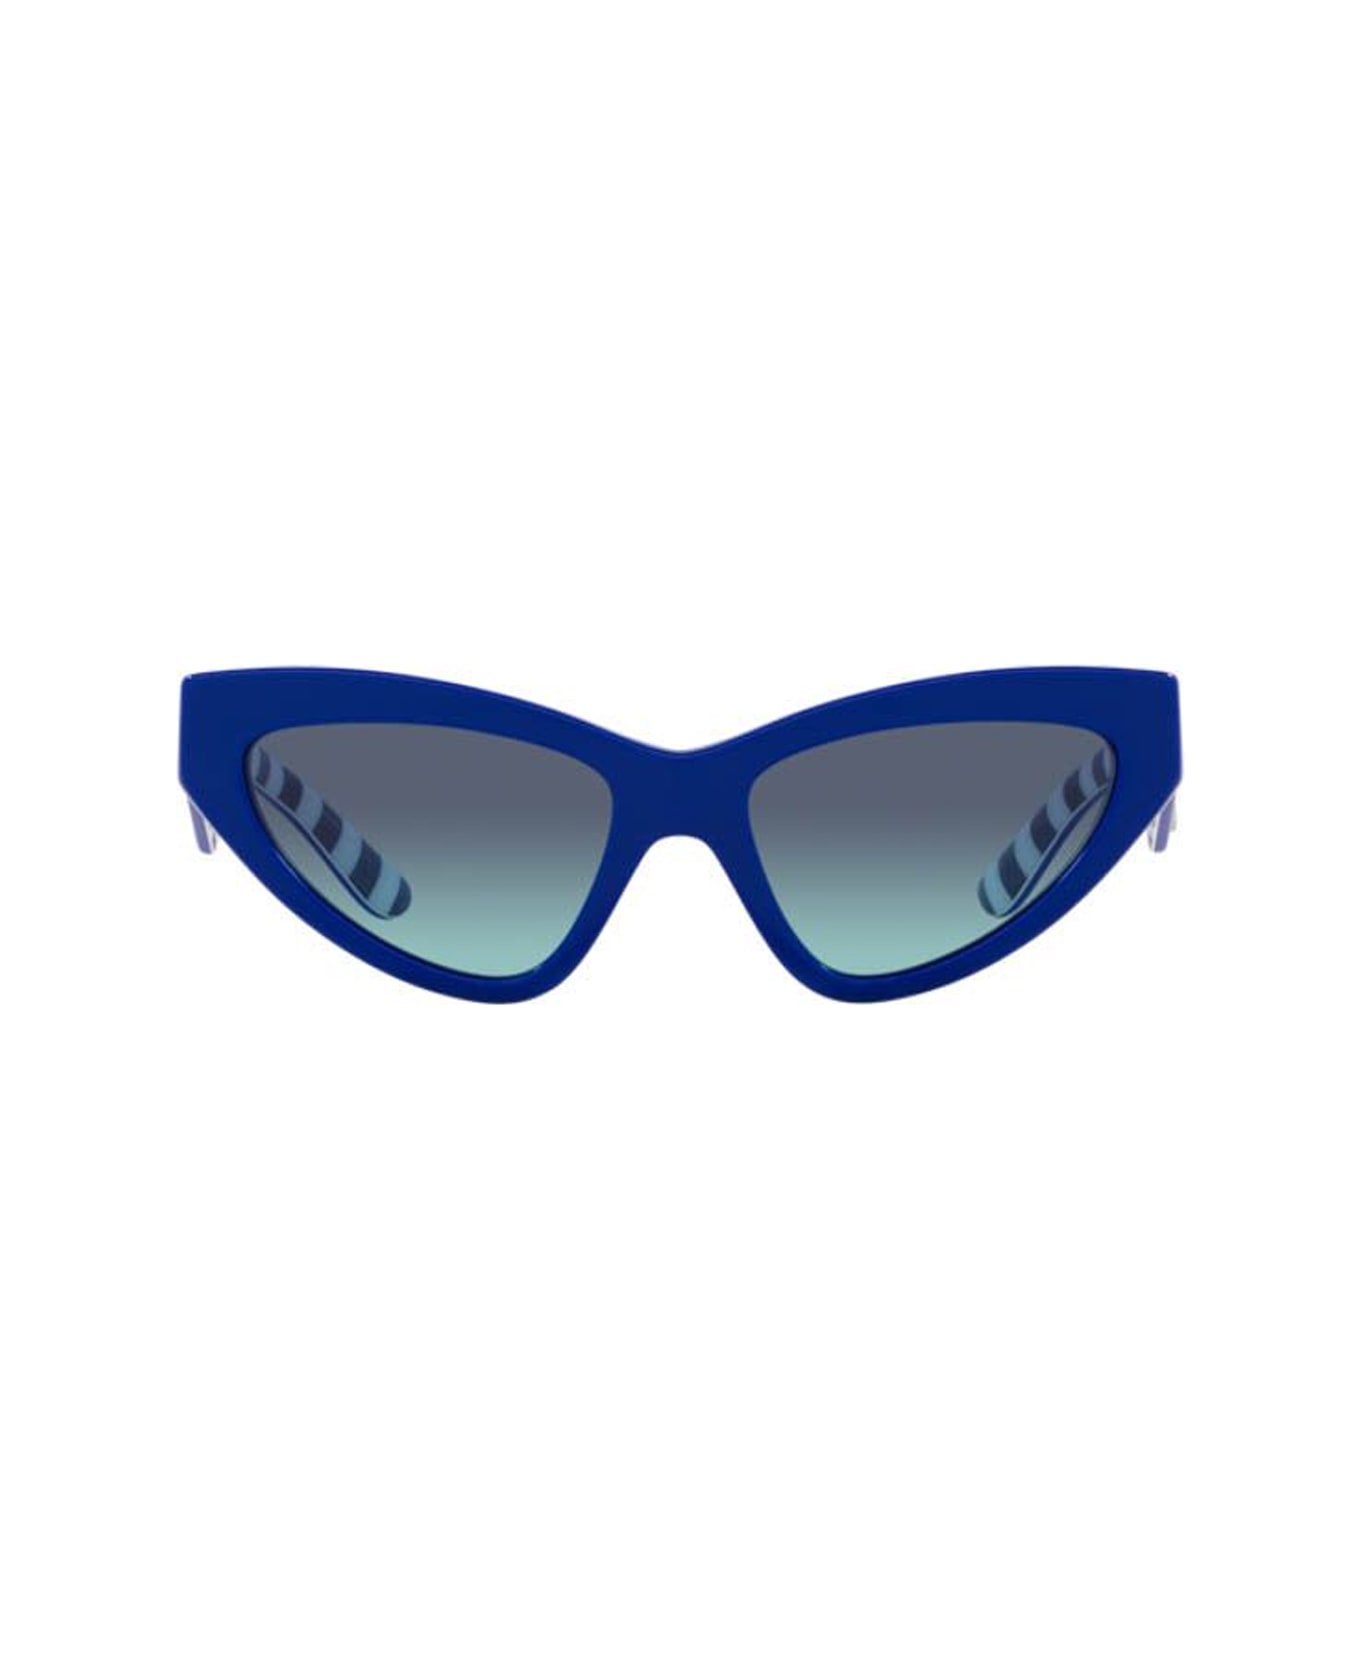 Dolce & Gabbana Eyewear Dg4439 311945 Sunglasses - Blu